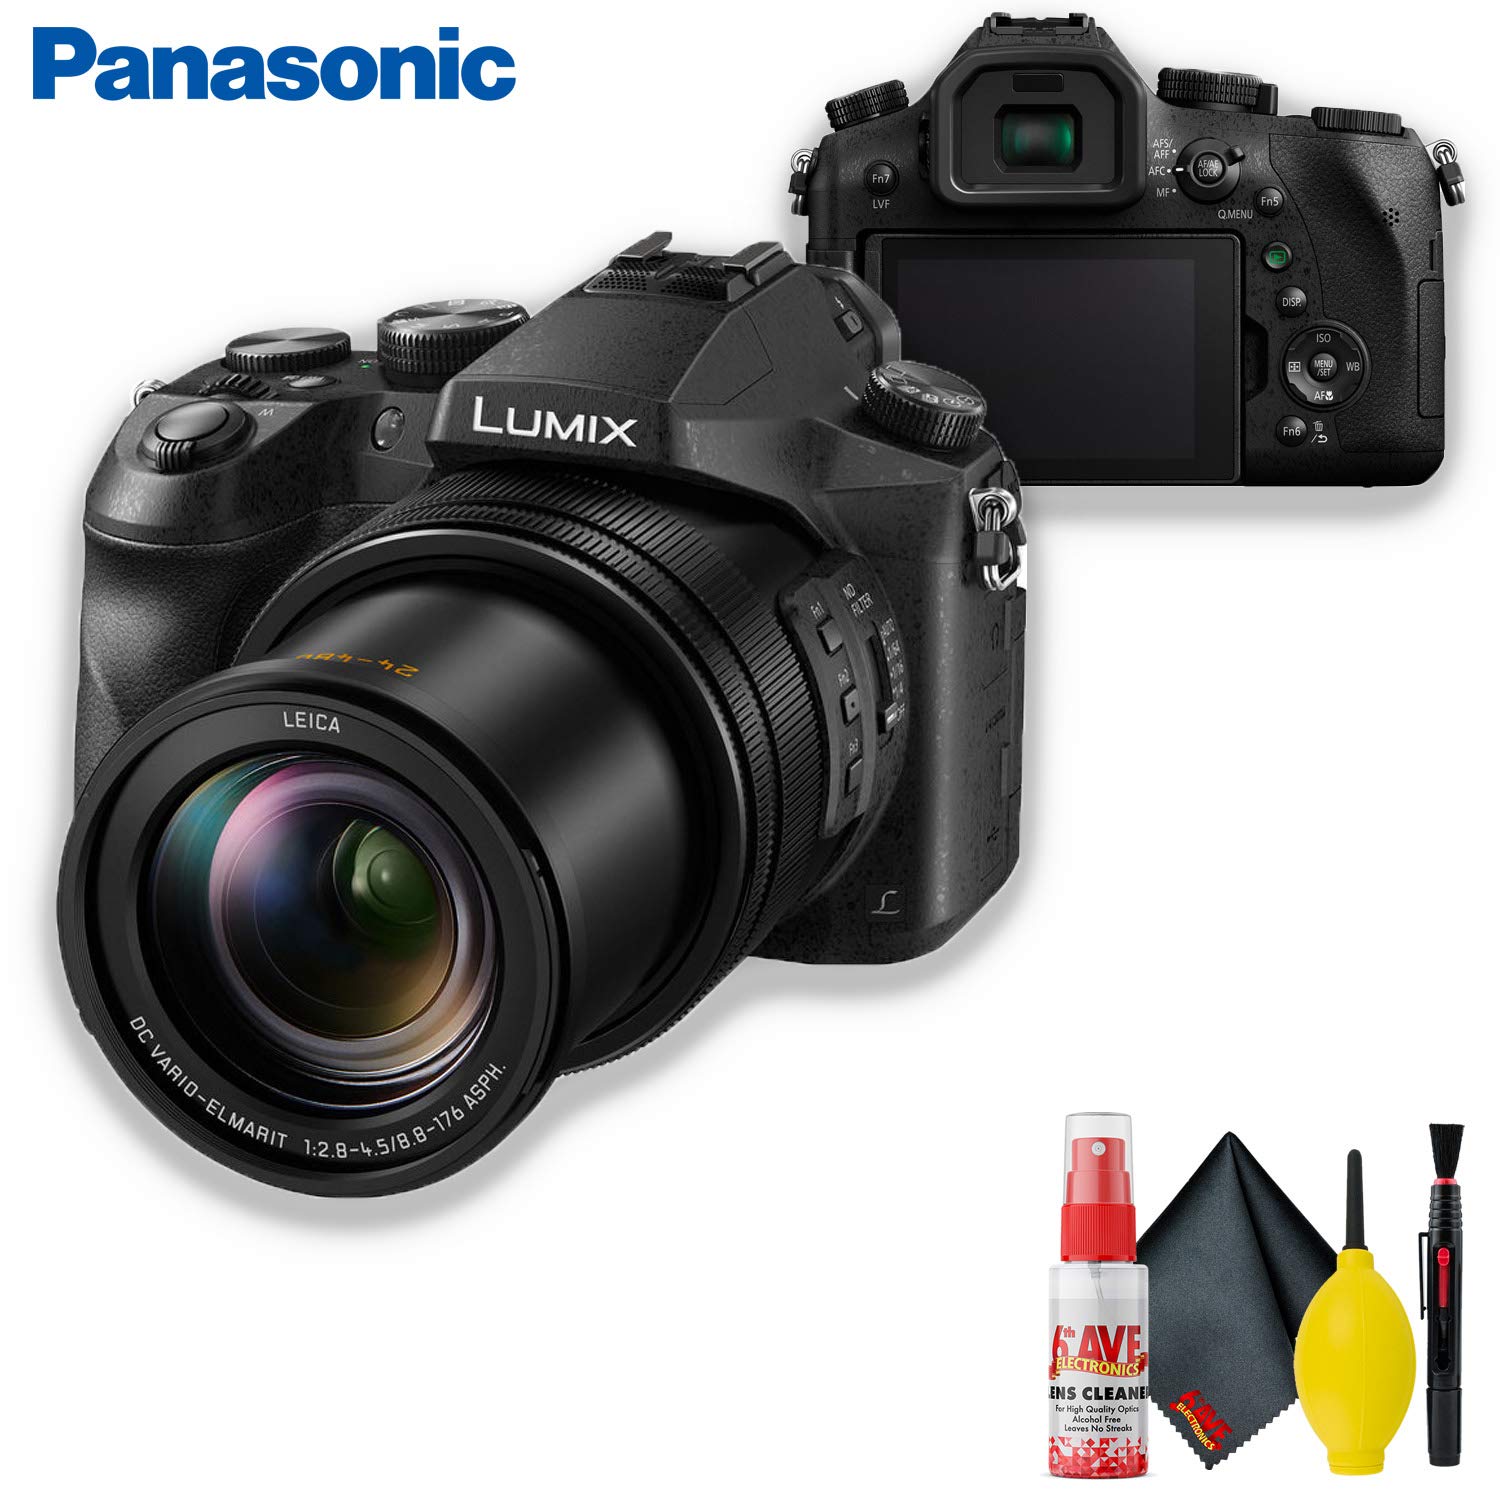 Panasonic Lumix DMC-FZ2500 Digital Camera with Cleaning Kit Starter Bundle